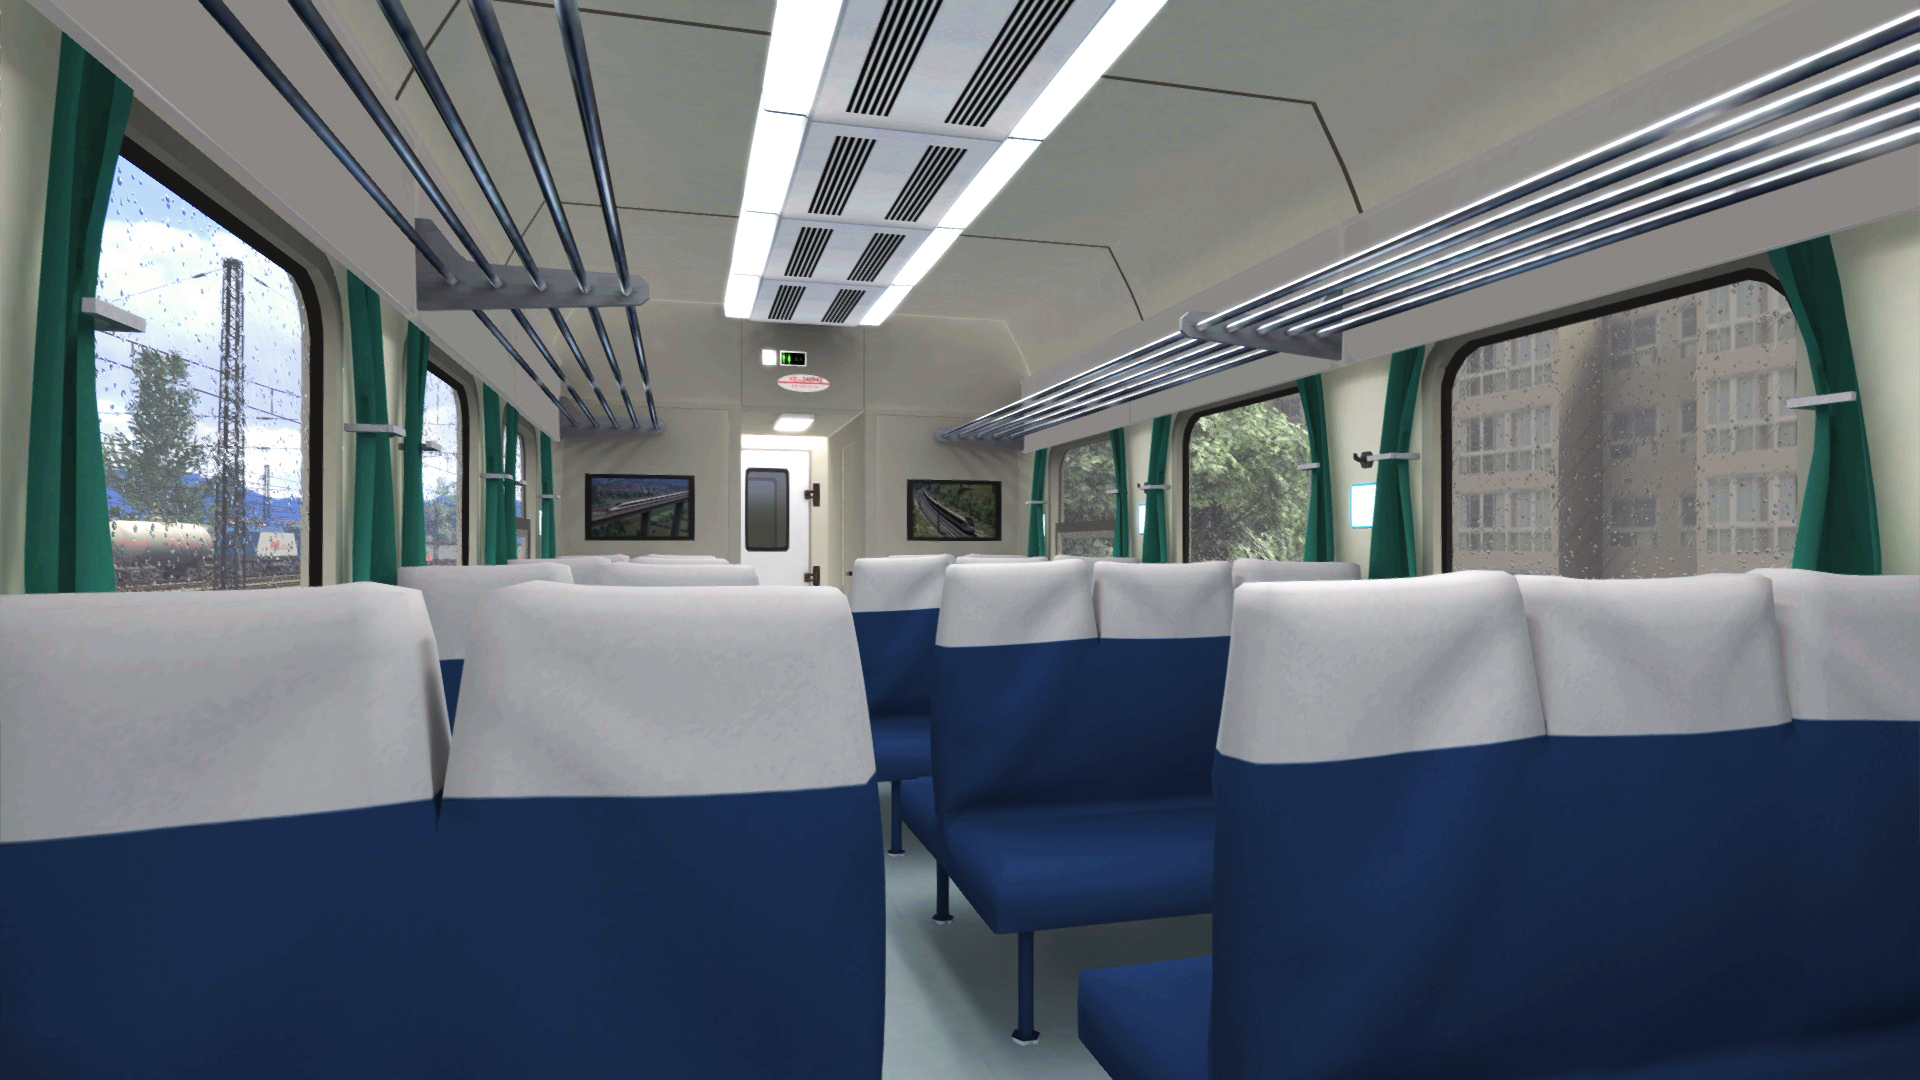 Train Simulator: Longhai Railway: Lingbao - Mianchi Route Add-On screenshot